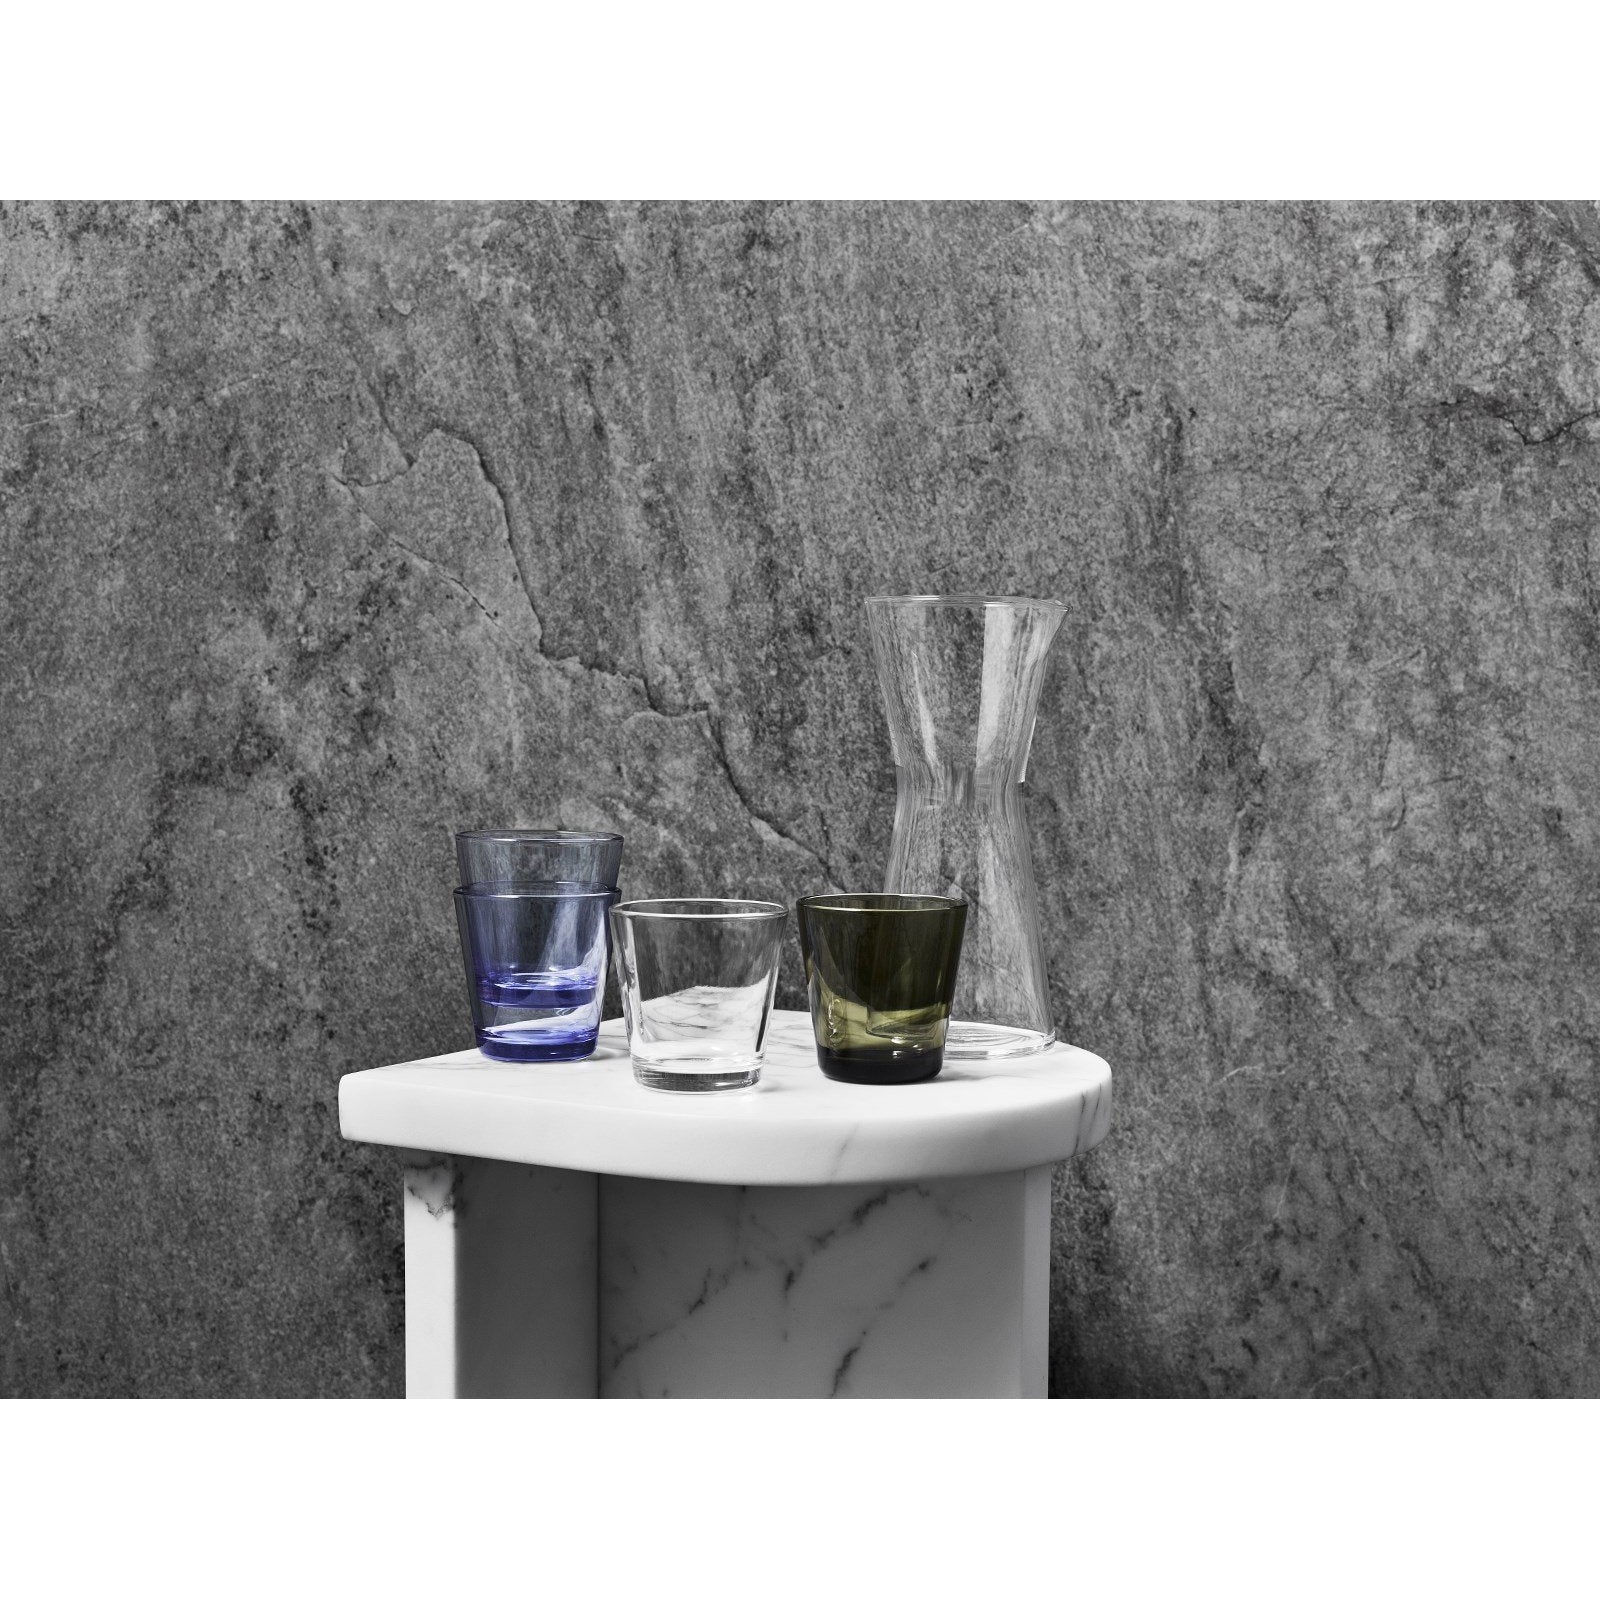 Iittala Kartio Glass Clear 2pcs，21cl